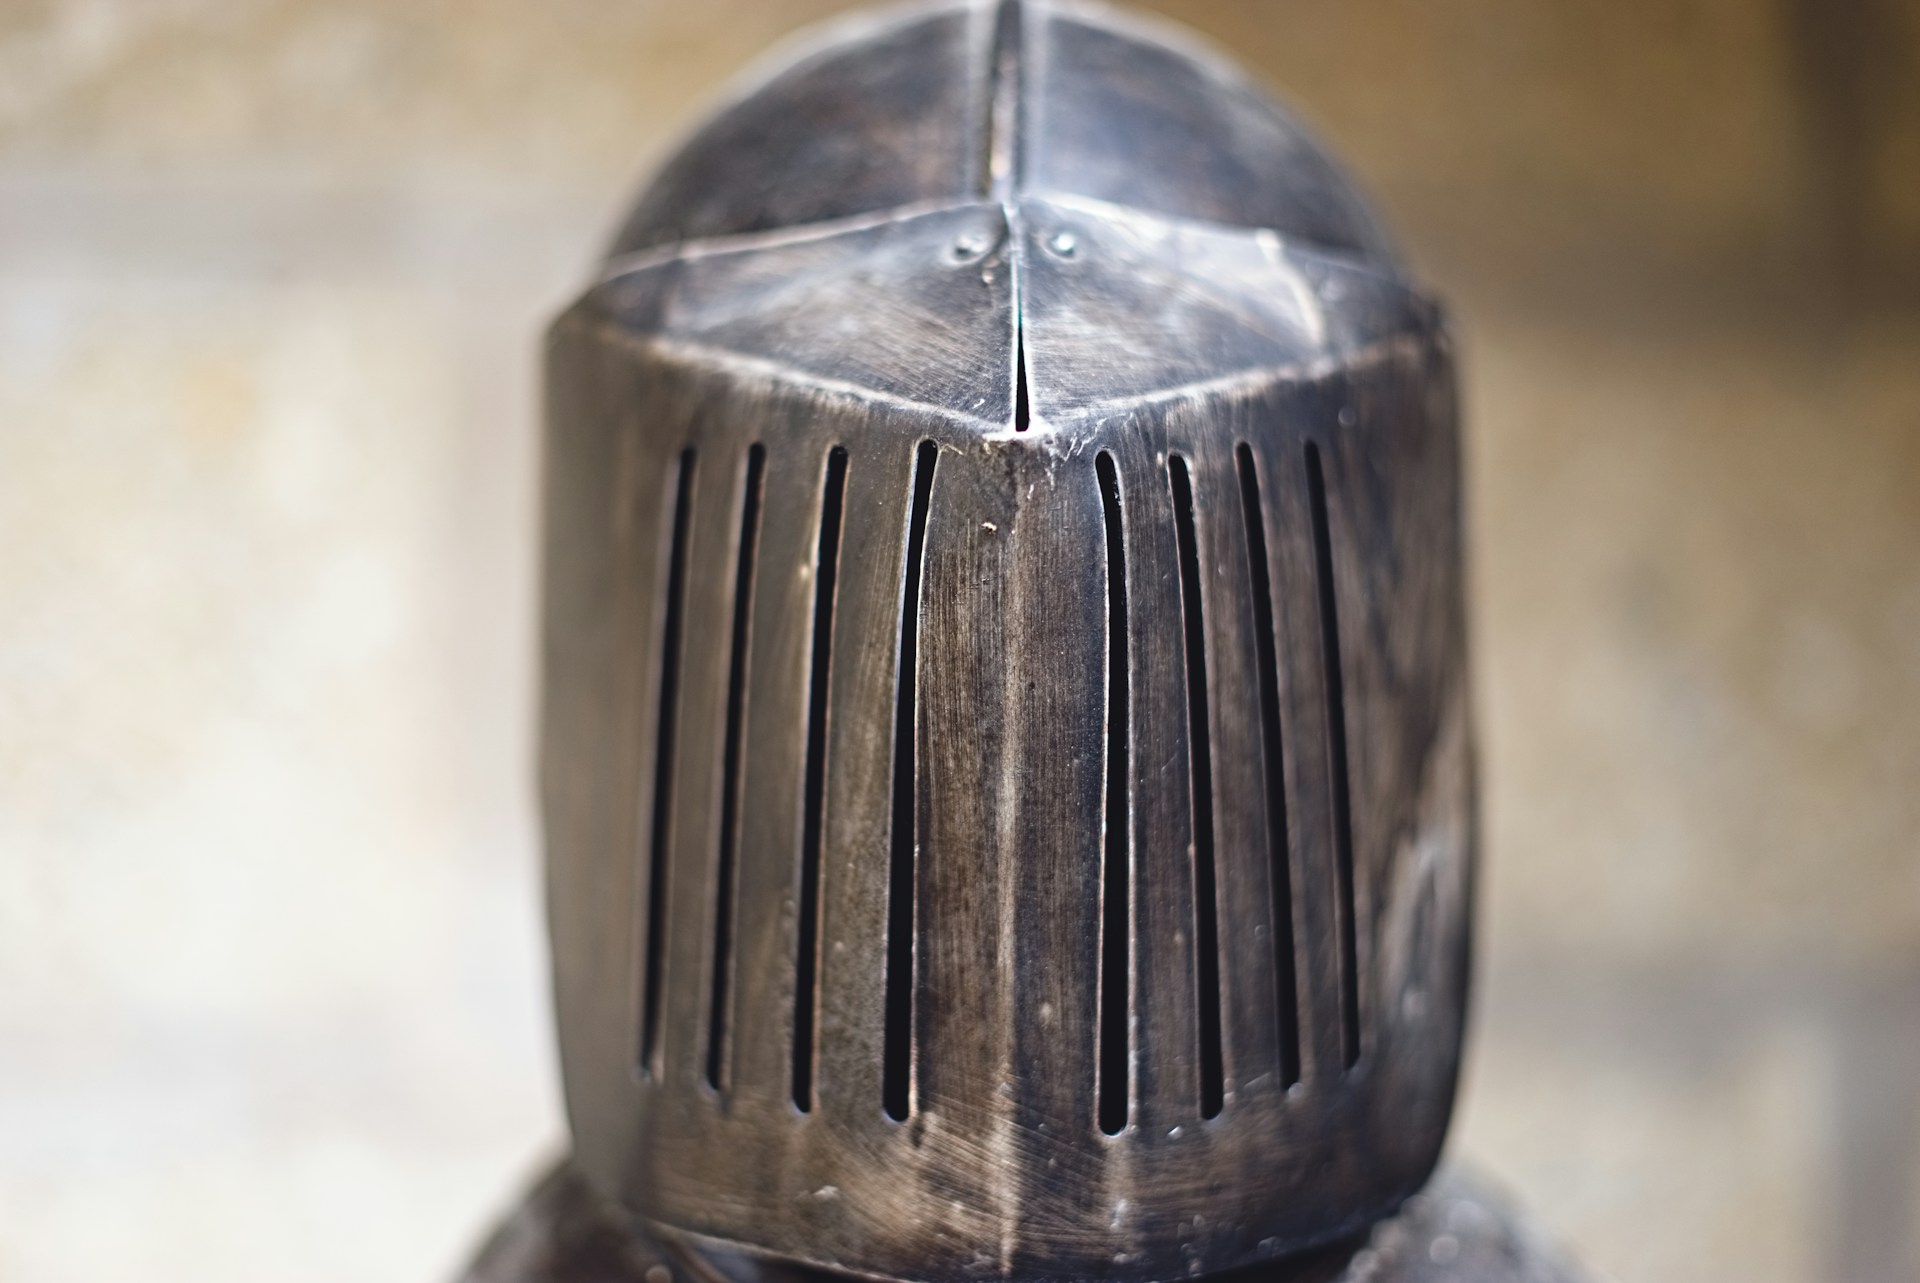 Full face visor of a metal head armor.